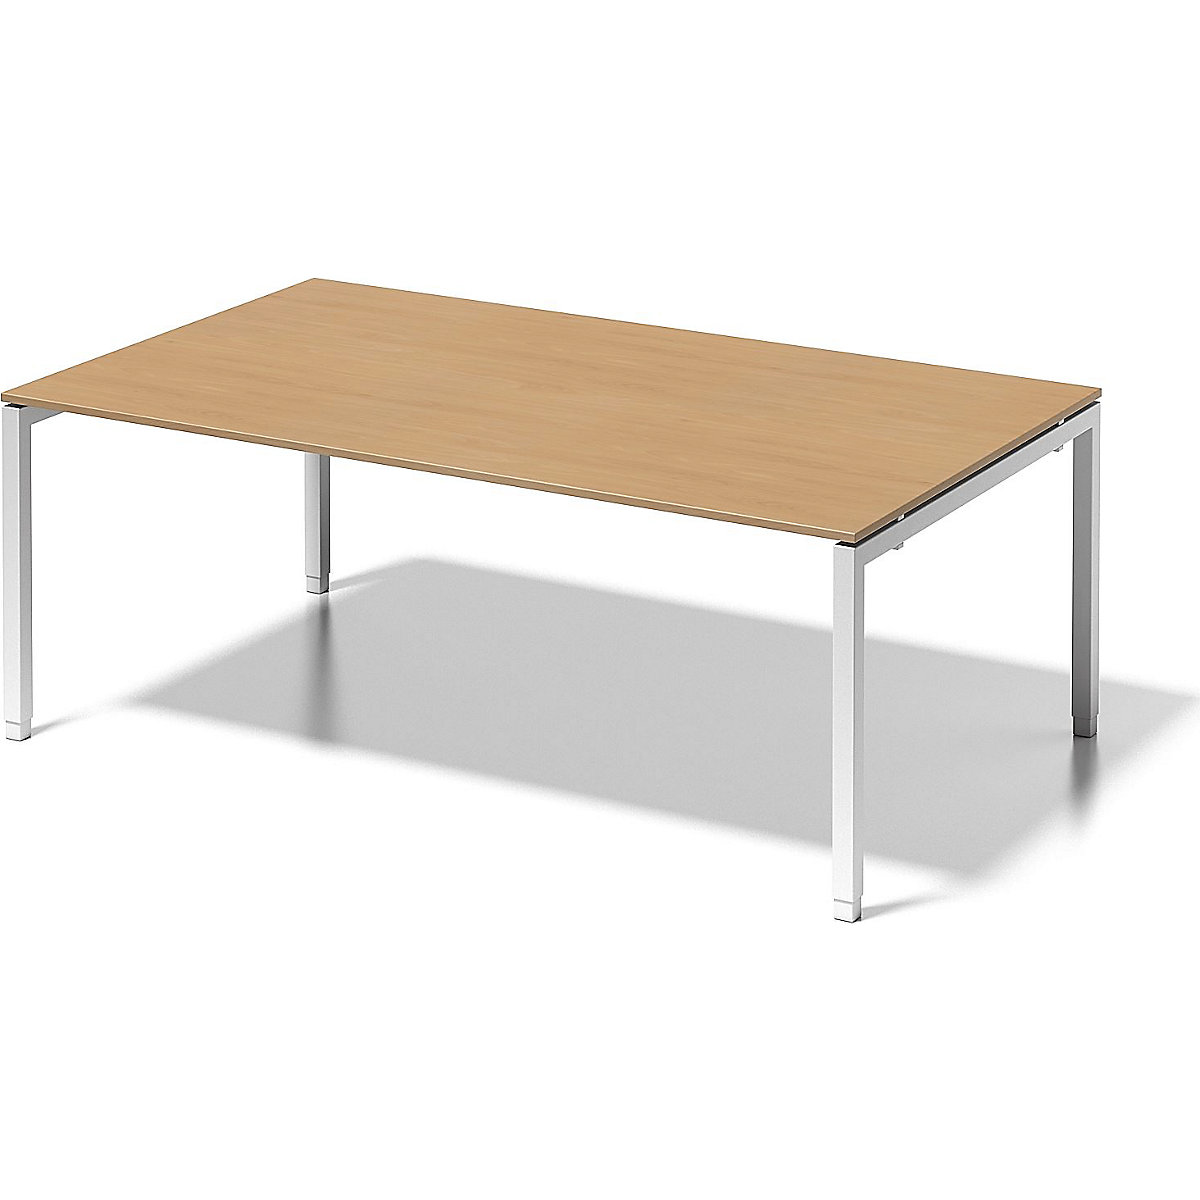 CITO desk, U-frame – BISLEY, HxWxD 650 – 850 x 2000 x 1200 mm, white frame, beech tabletop-2